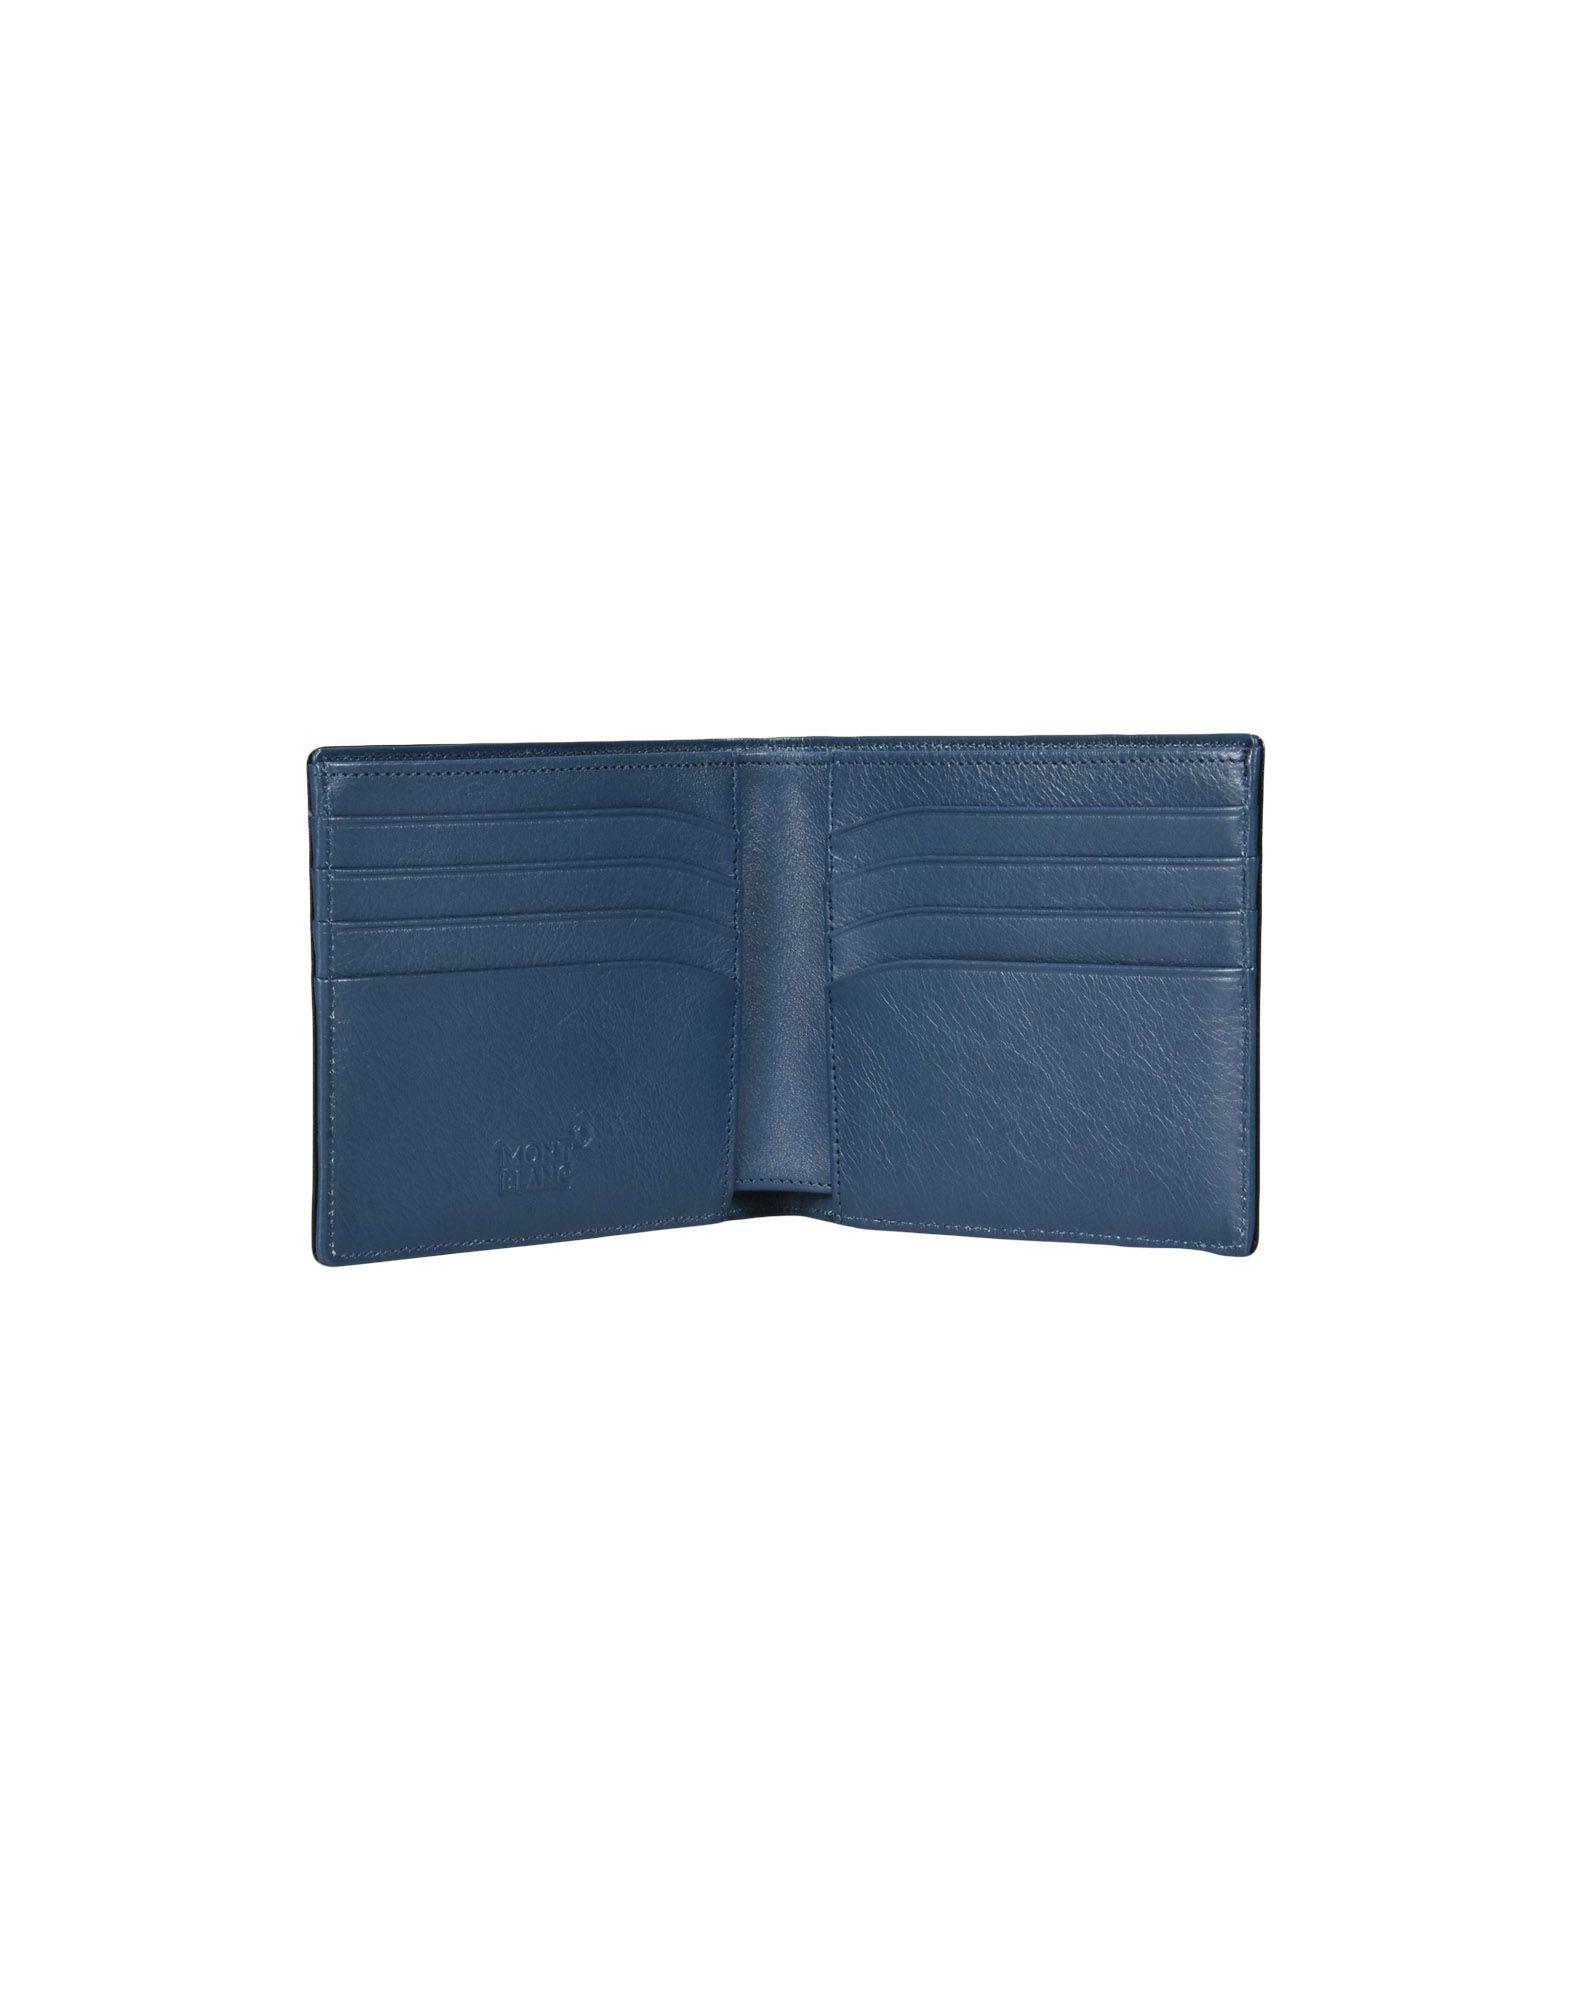 Montblanc Leather Wallet in Dark Blue (Blue) for Men - Lyst